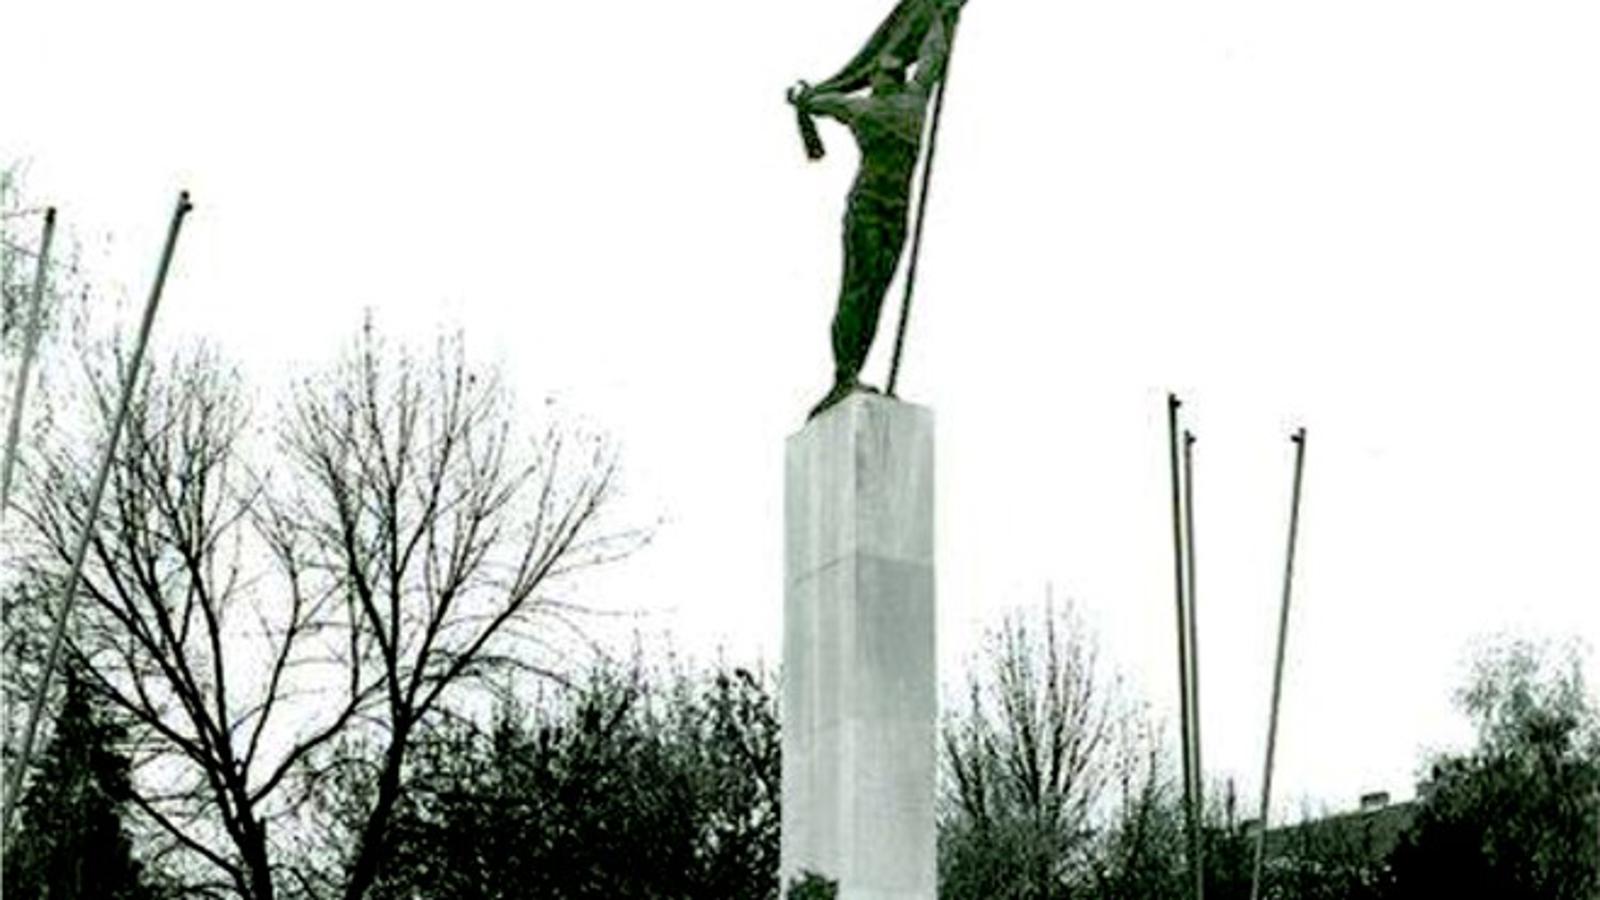 Pobjednik, autor Dušan Džamonja, detalj spomenika